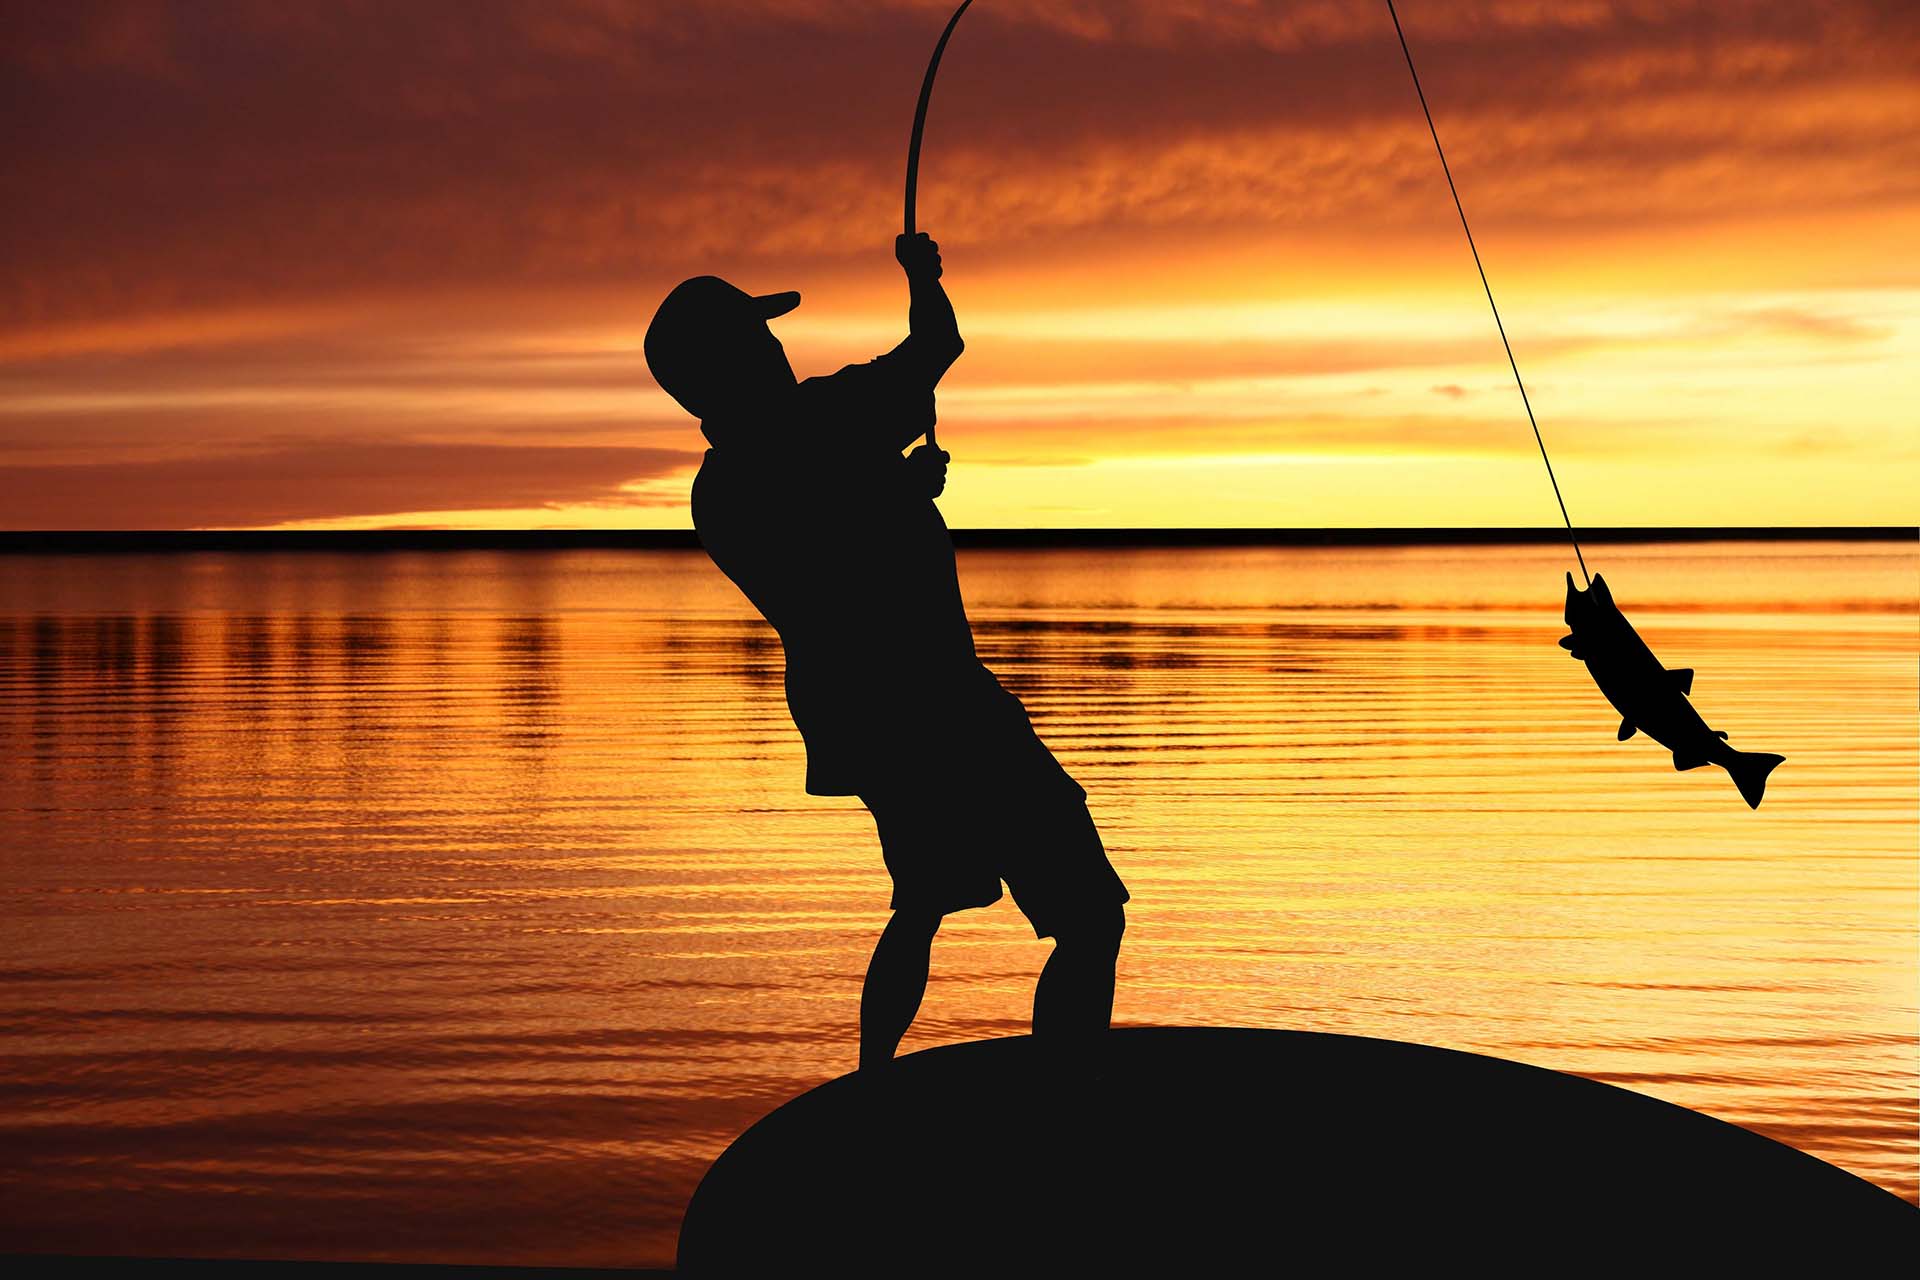 fisherman catching fish during the sunrise